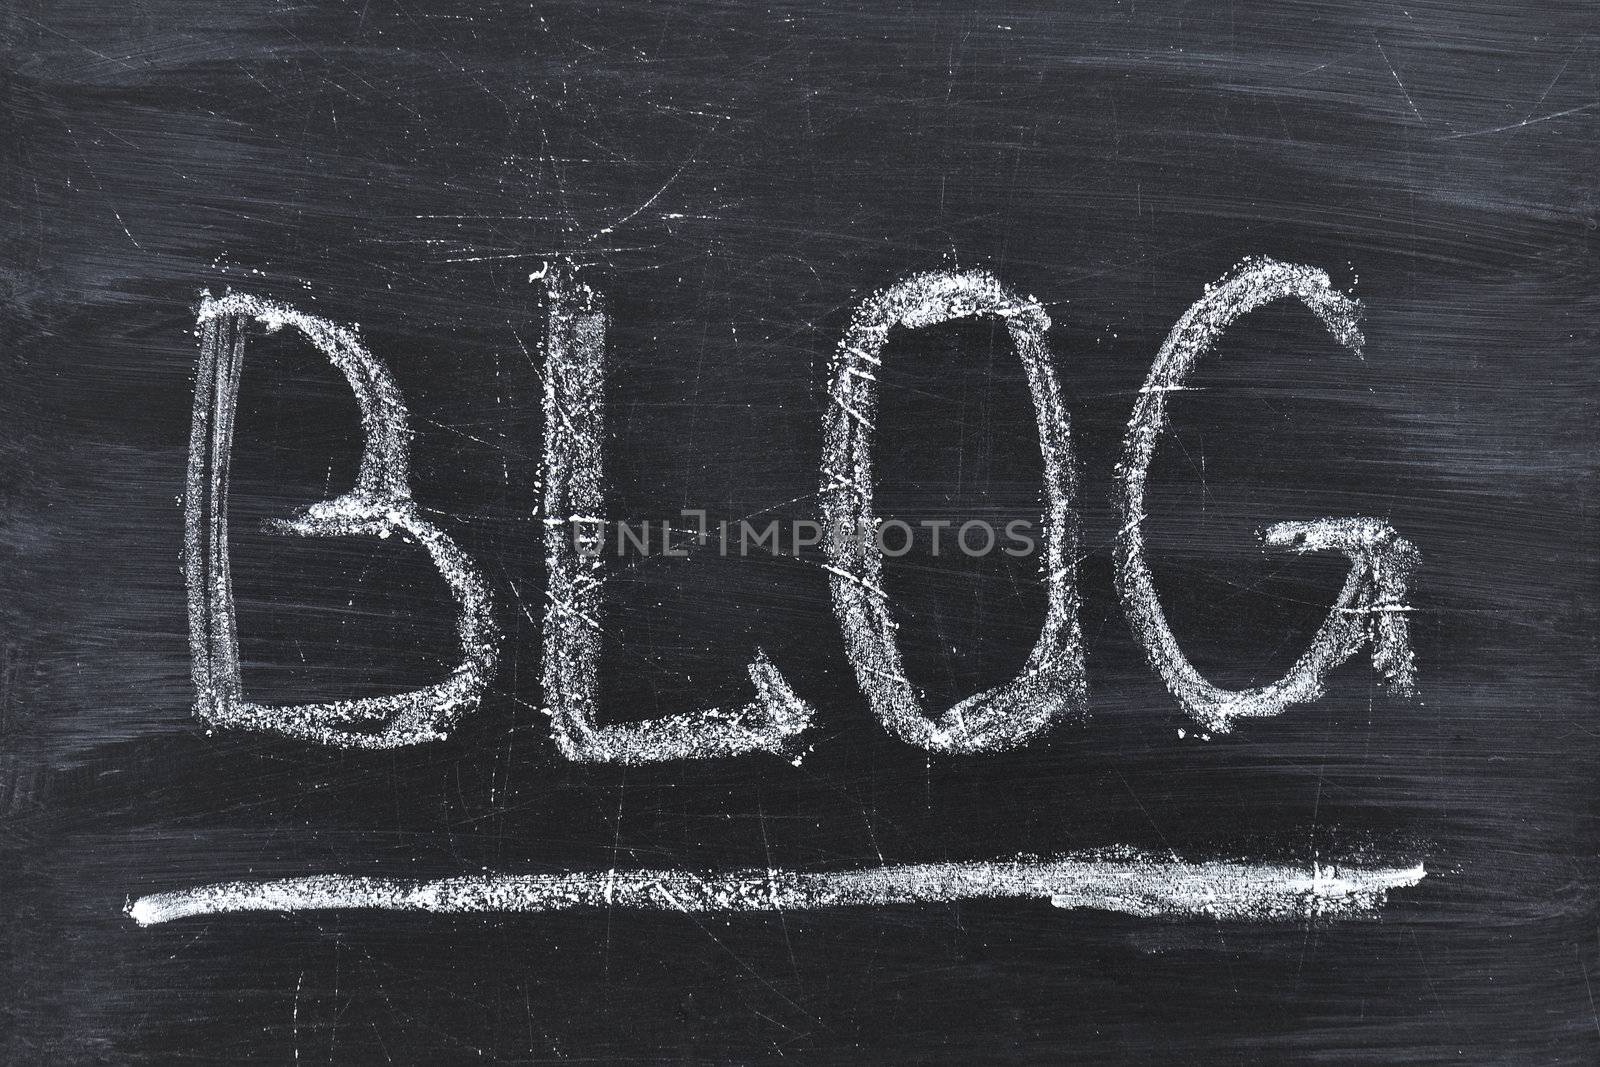 Blog word handwritten on the black chalkboard